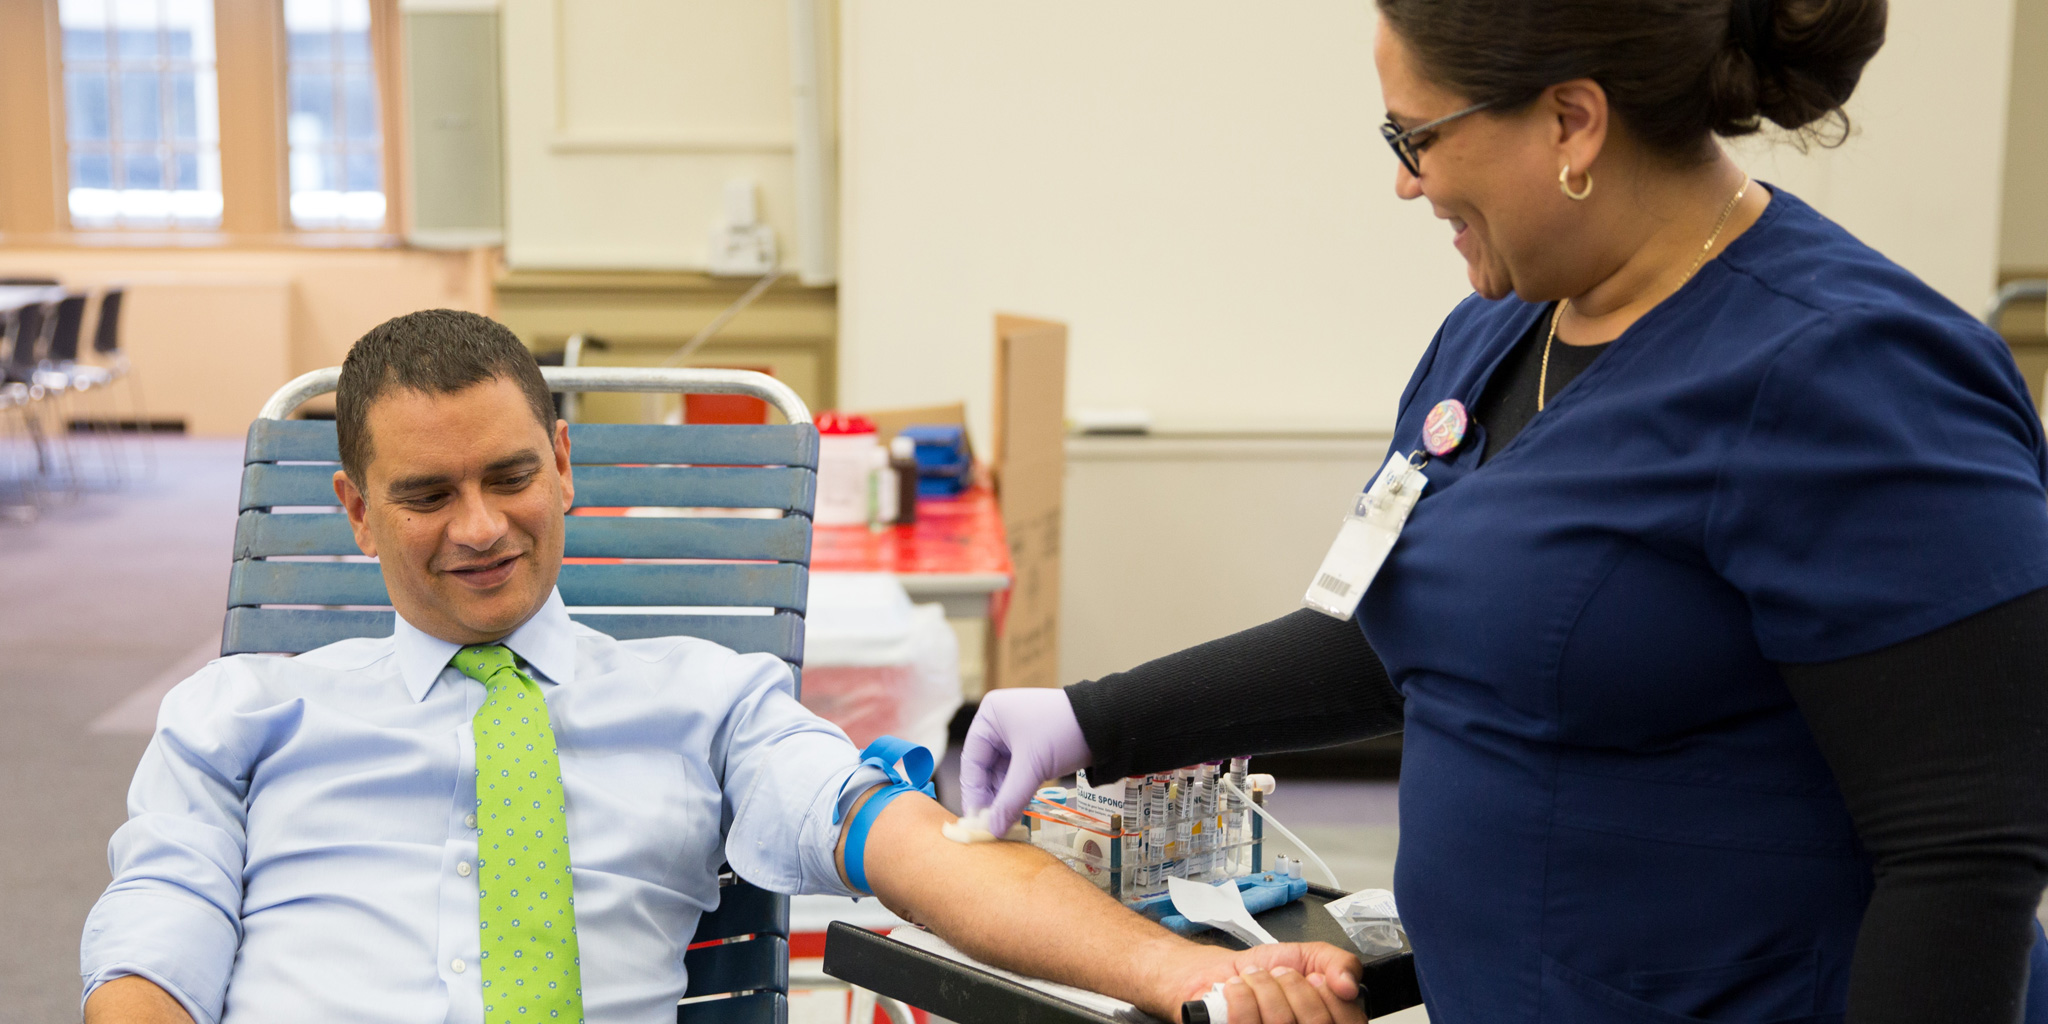 Lehman College President José Luis Cruz donates blood at the campus blood drive.